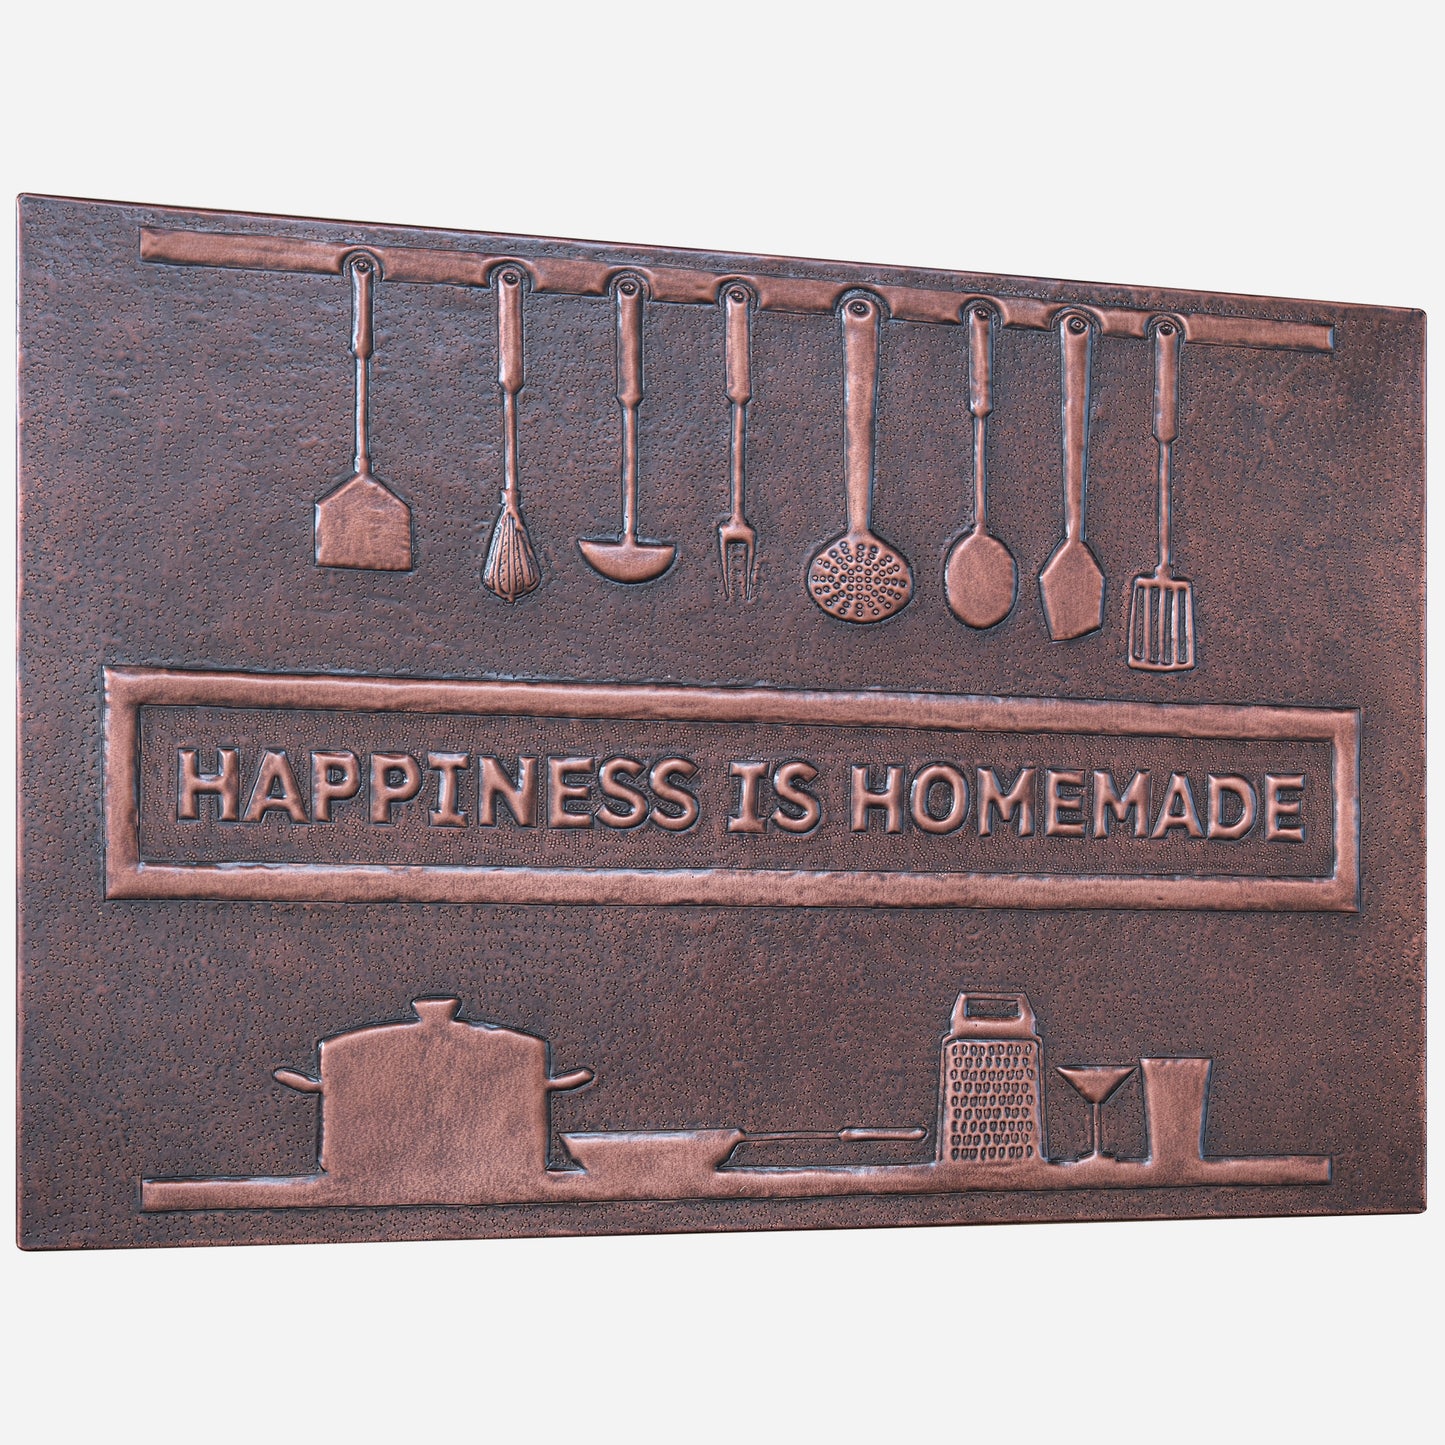 "Happiness is Homemade" Kitchen Backsplash Tile - 18x24 Brown